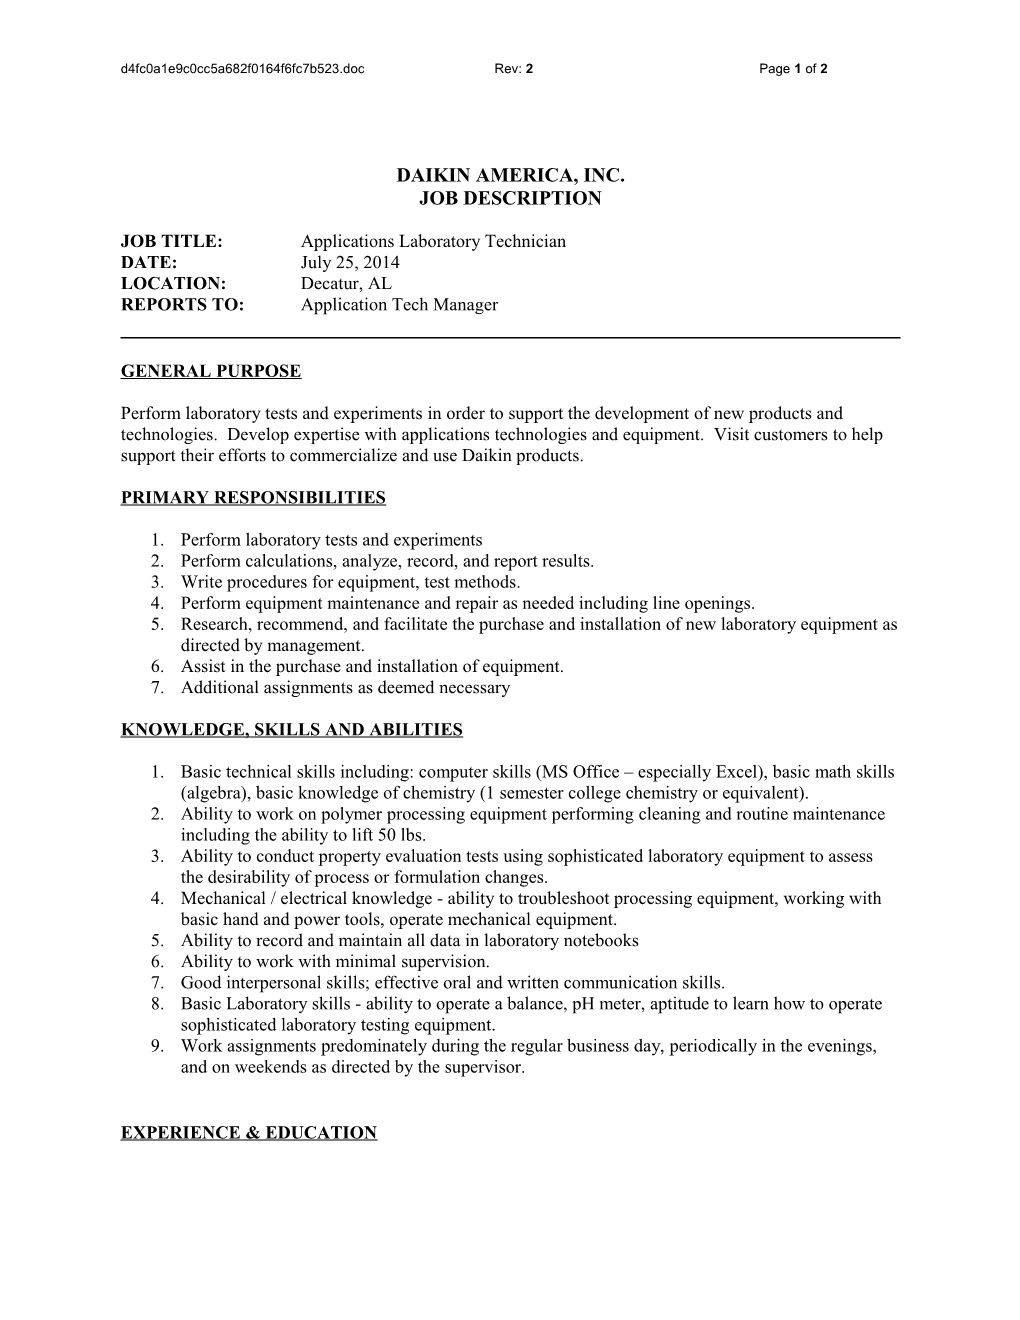 HR-0202 Applications Development Technician Rev: 2 Page 1 of 2